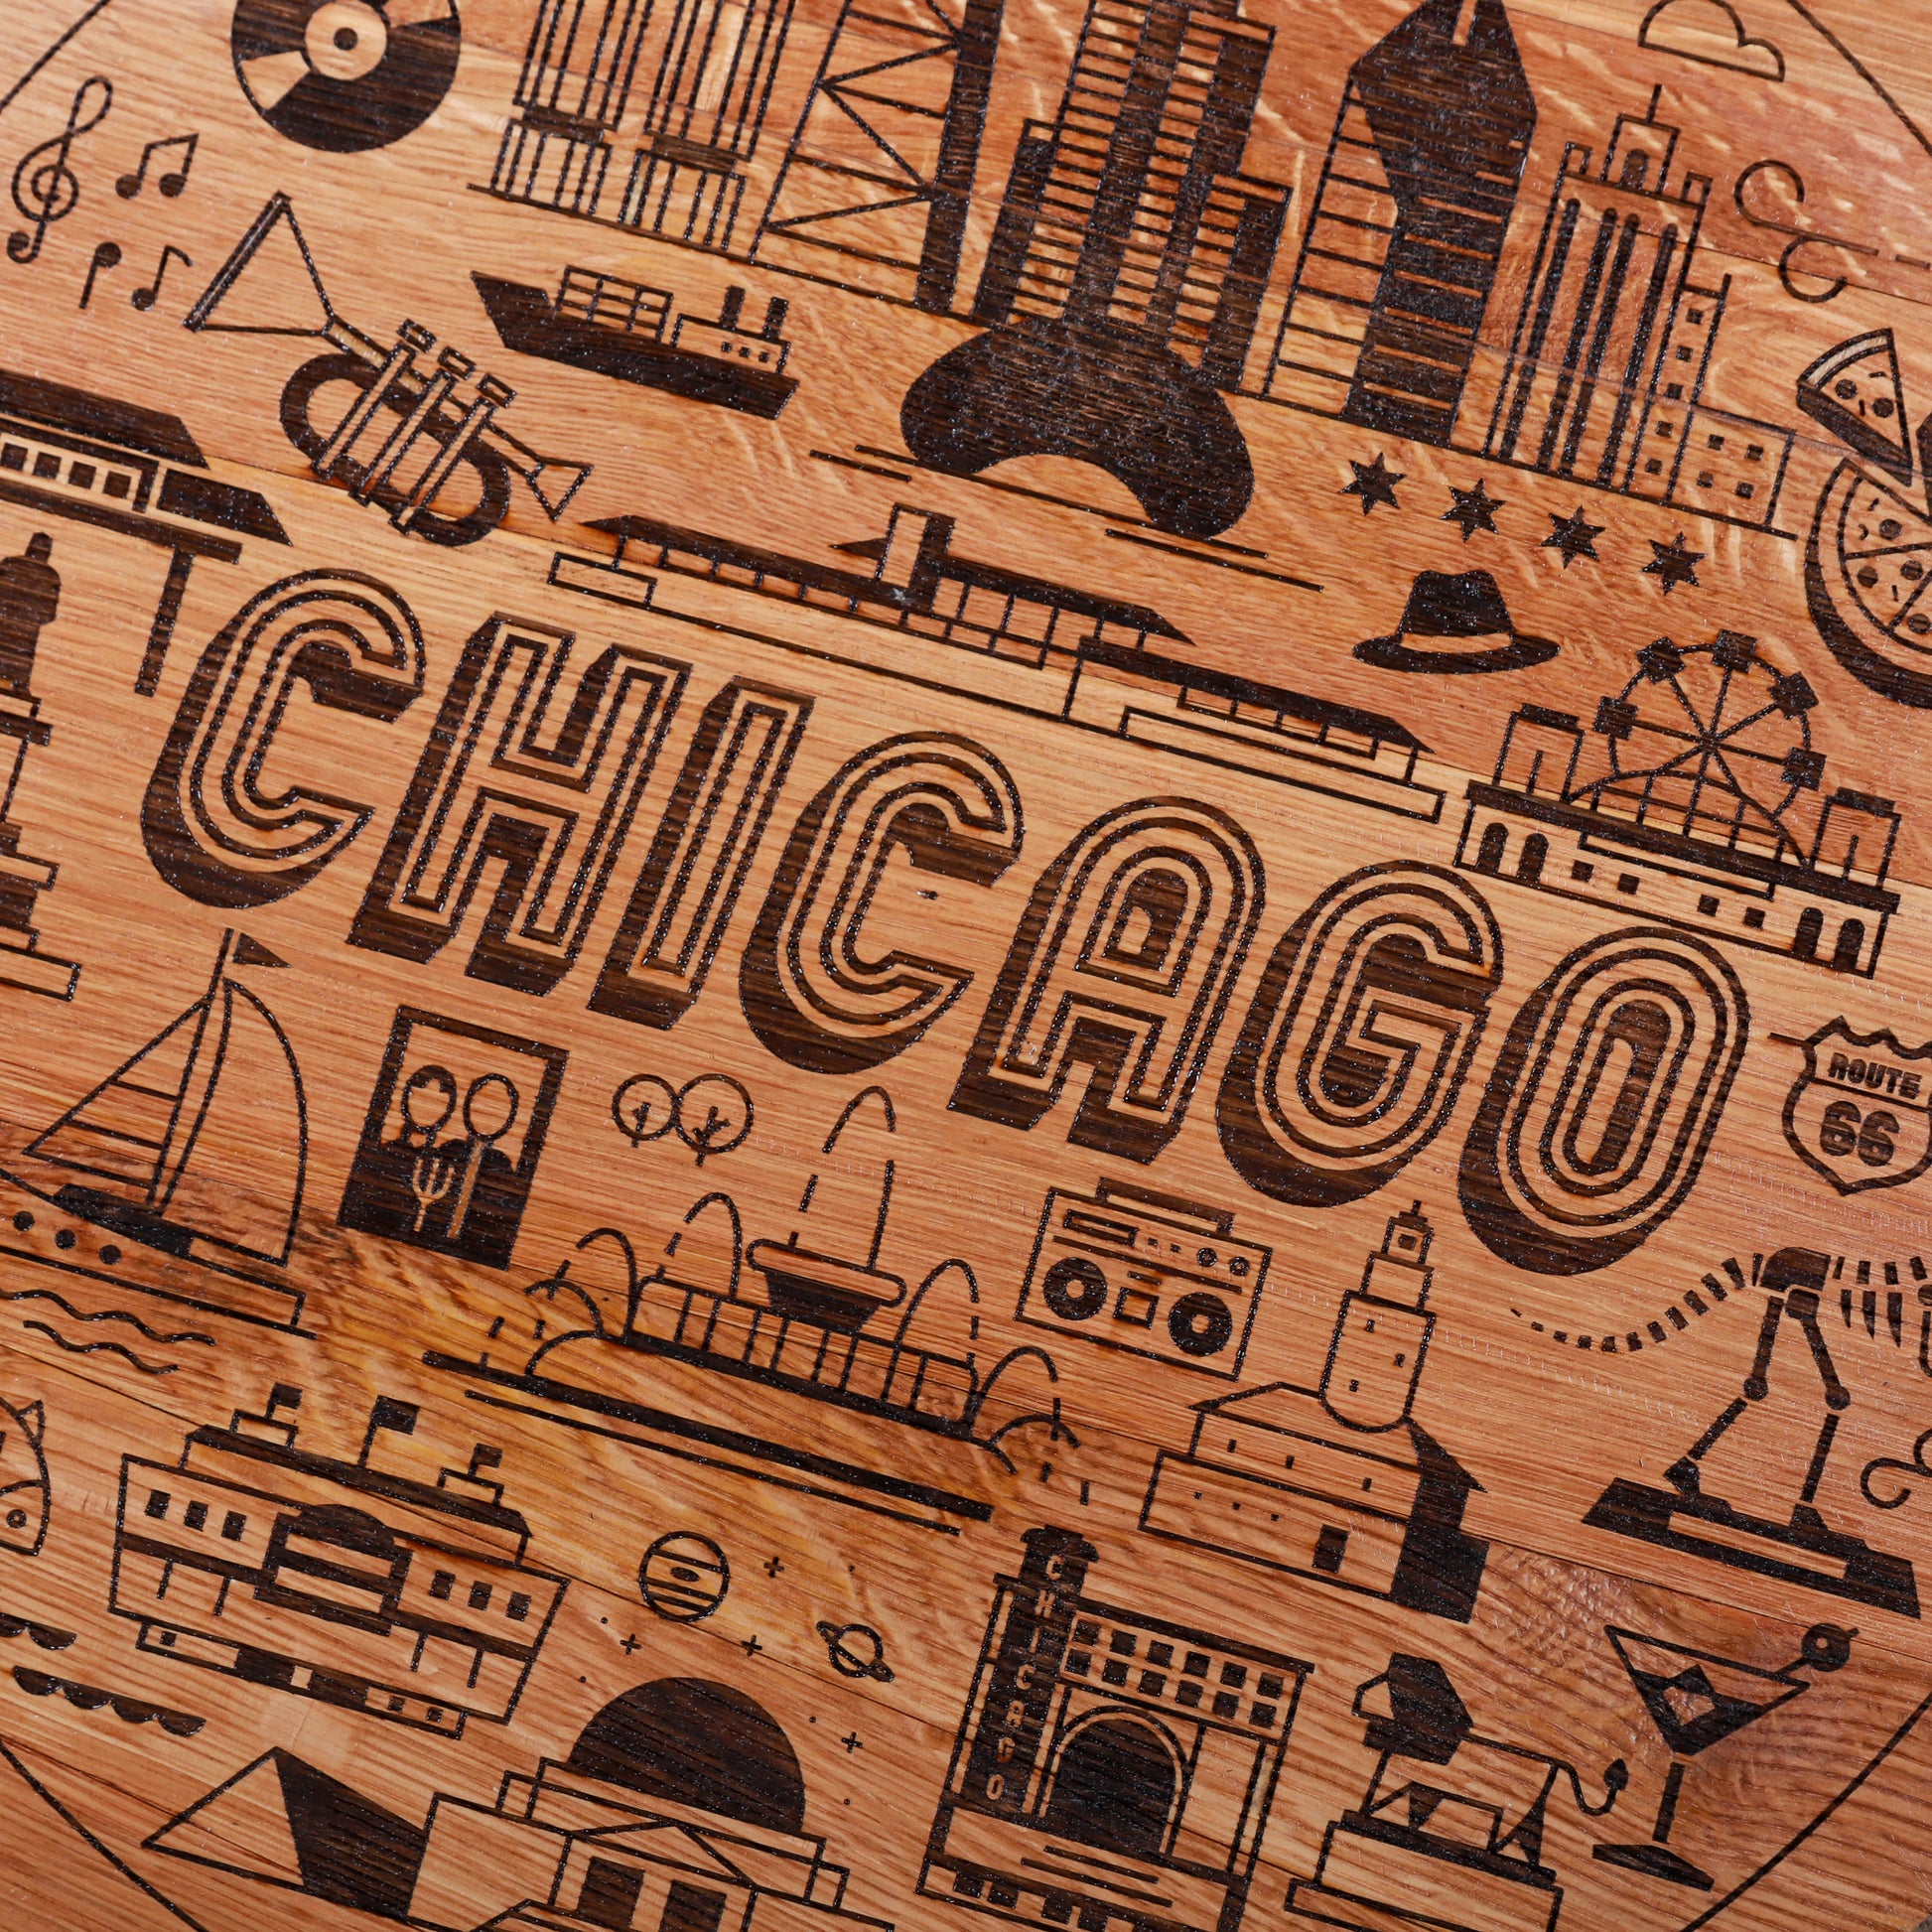 Chicago Design Engraved Whiskey Barrel Head - Motor City Barrels